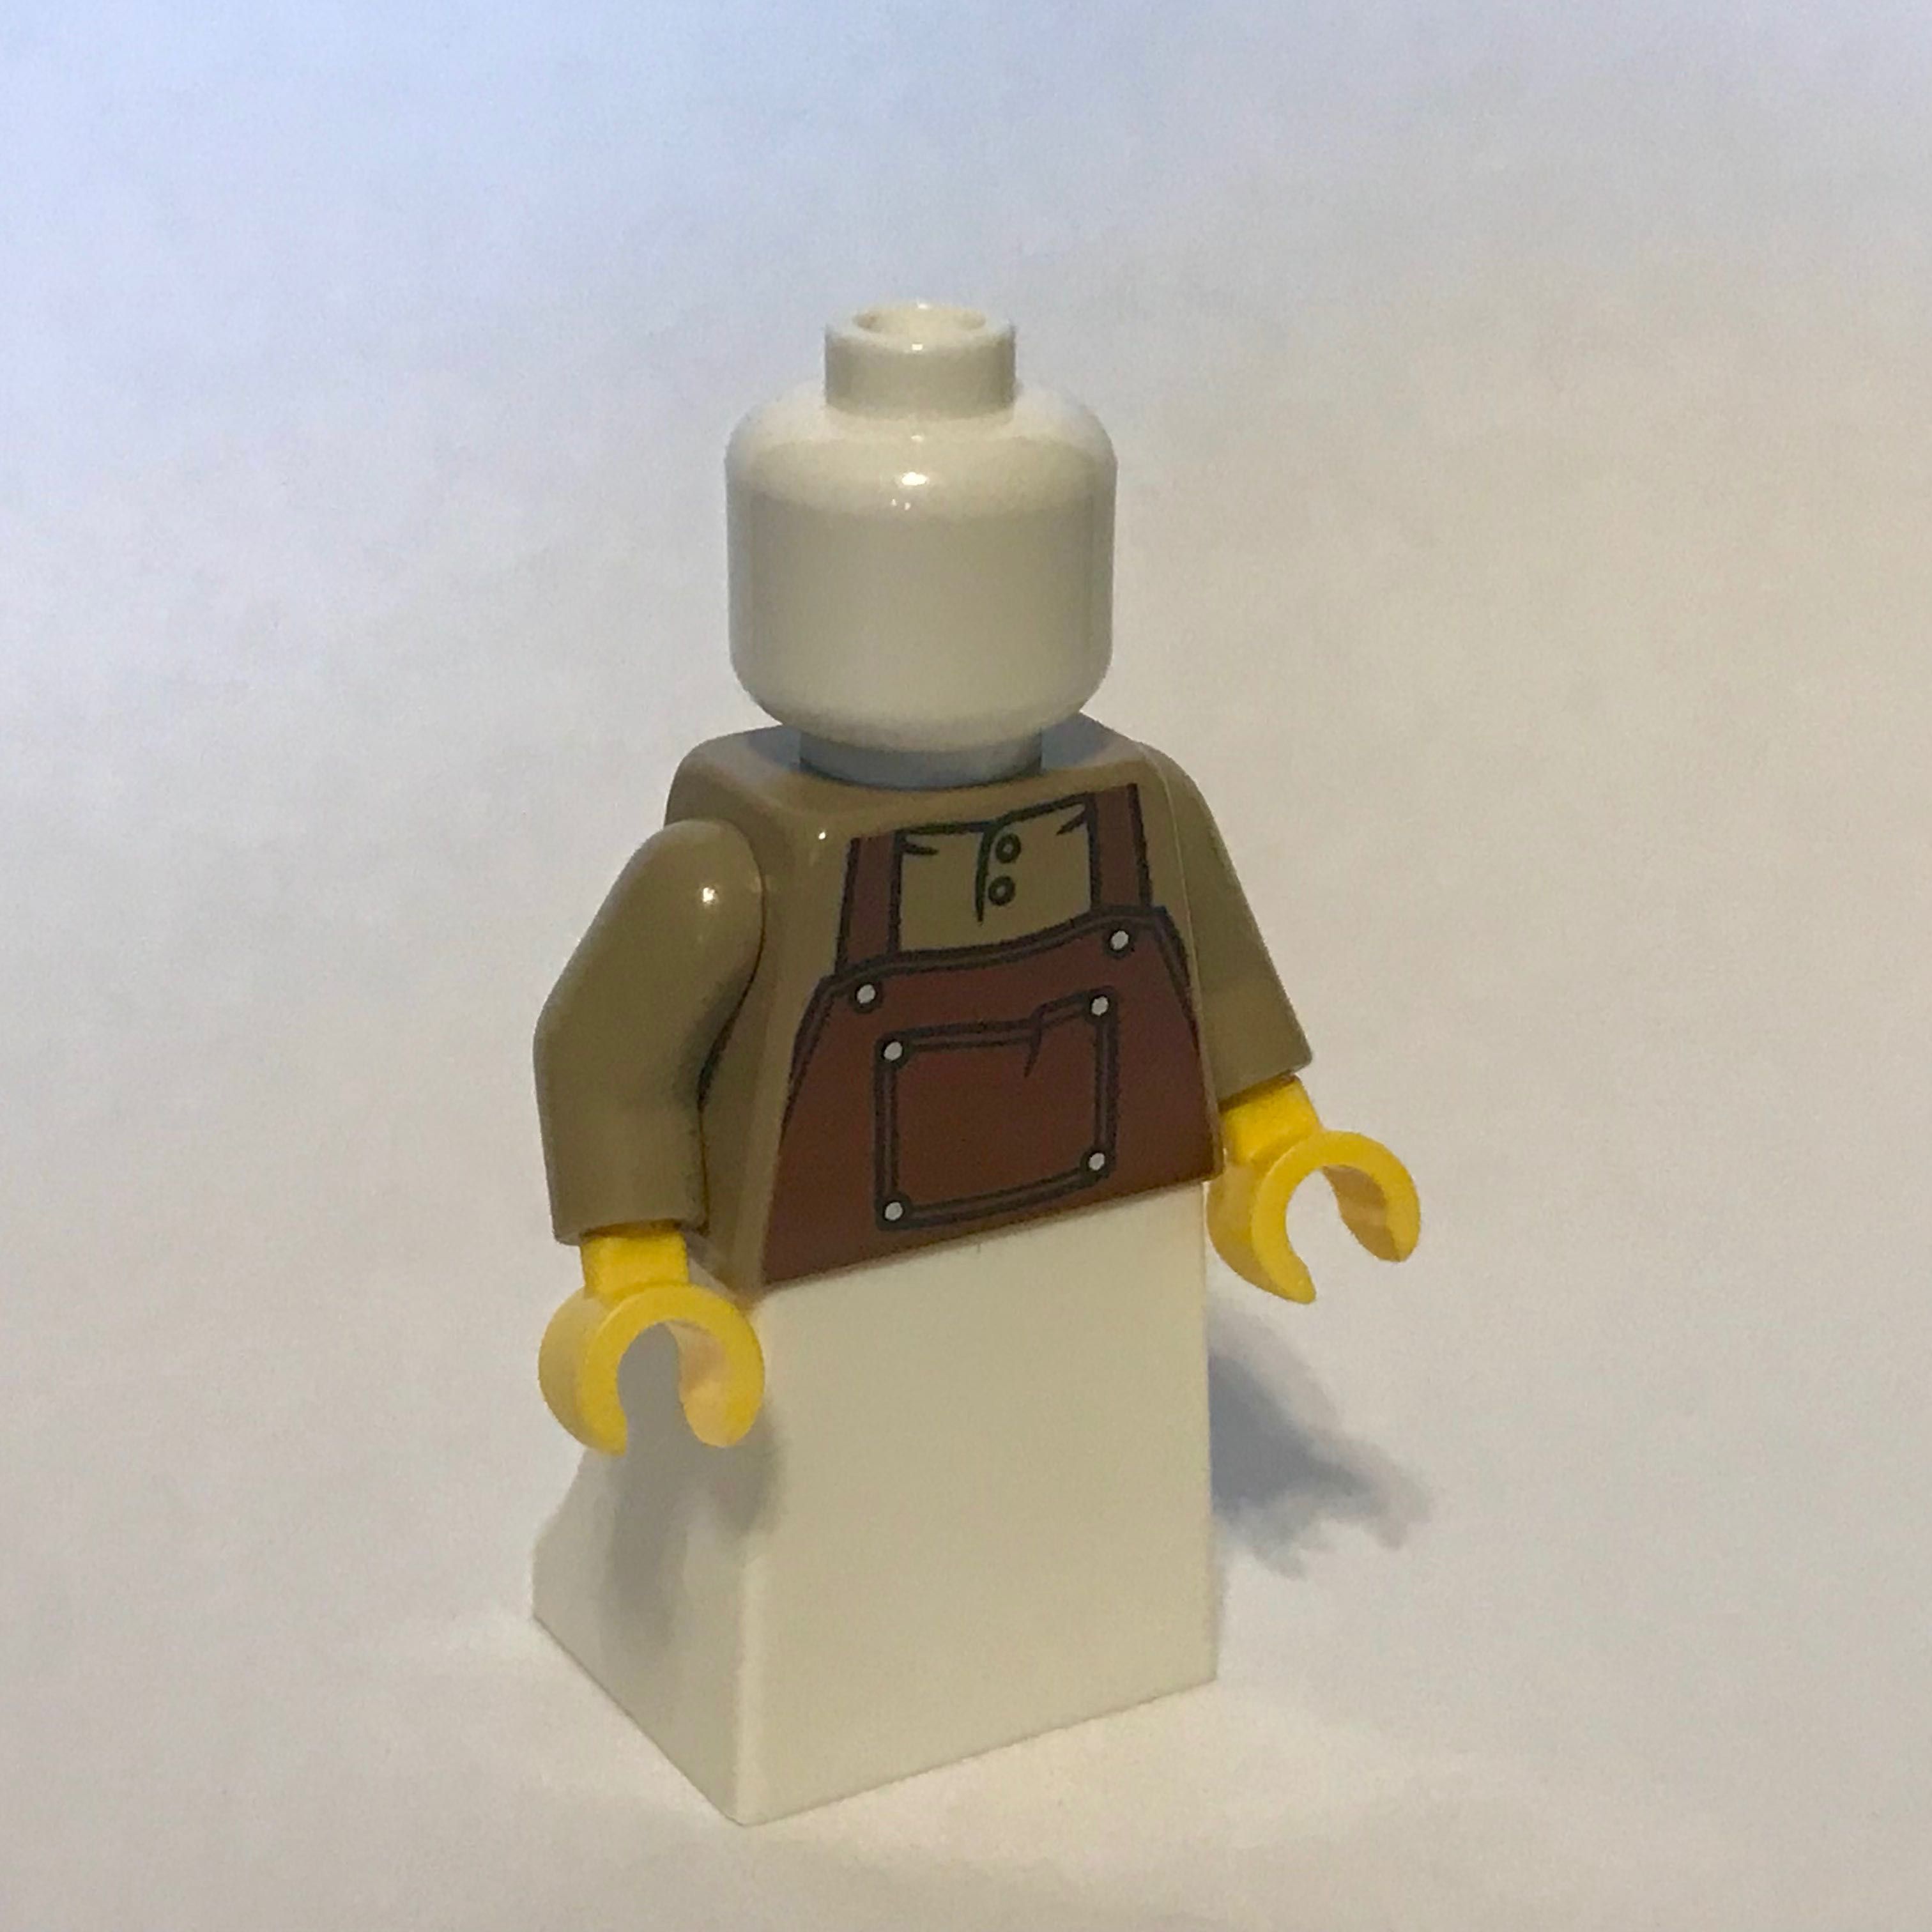 LEGO tors kowala castle rycerz